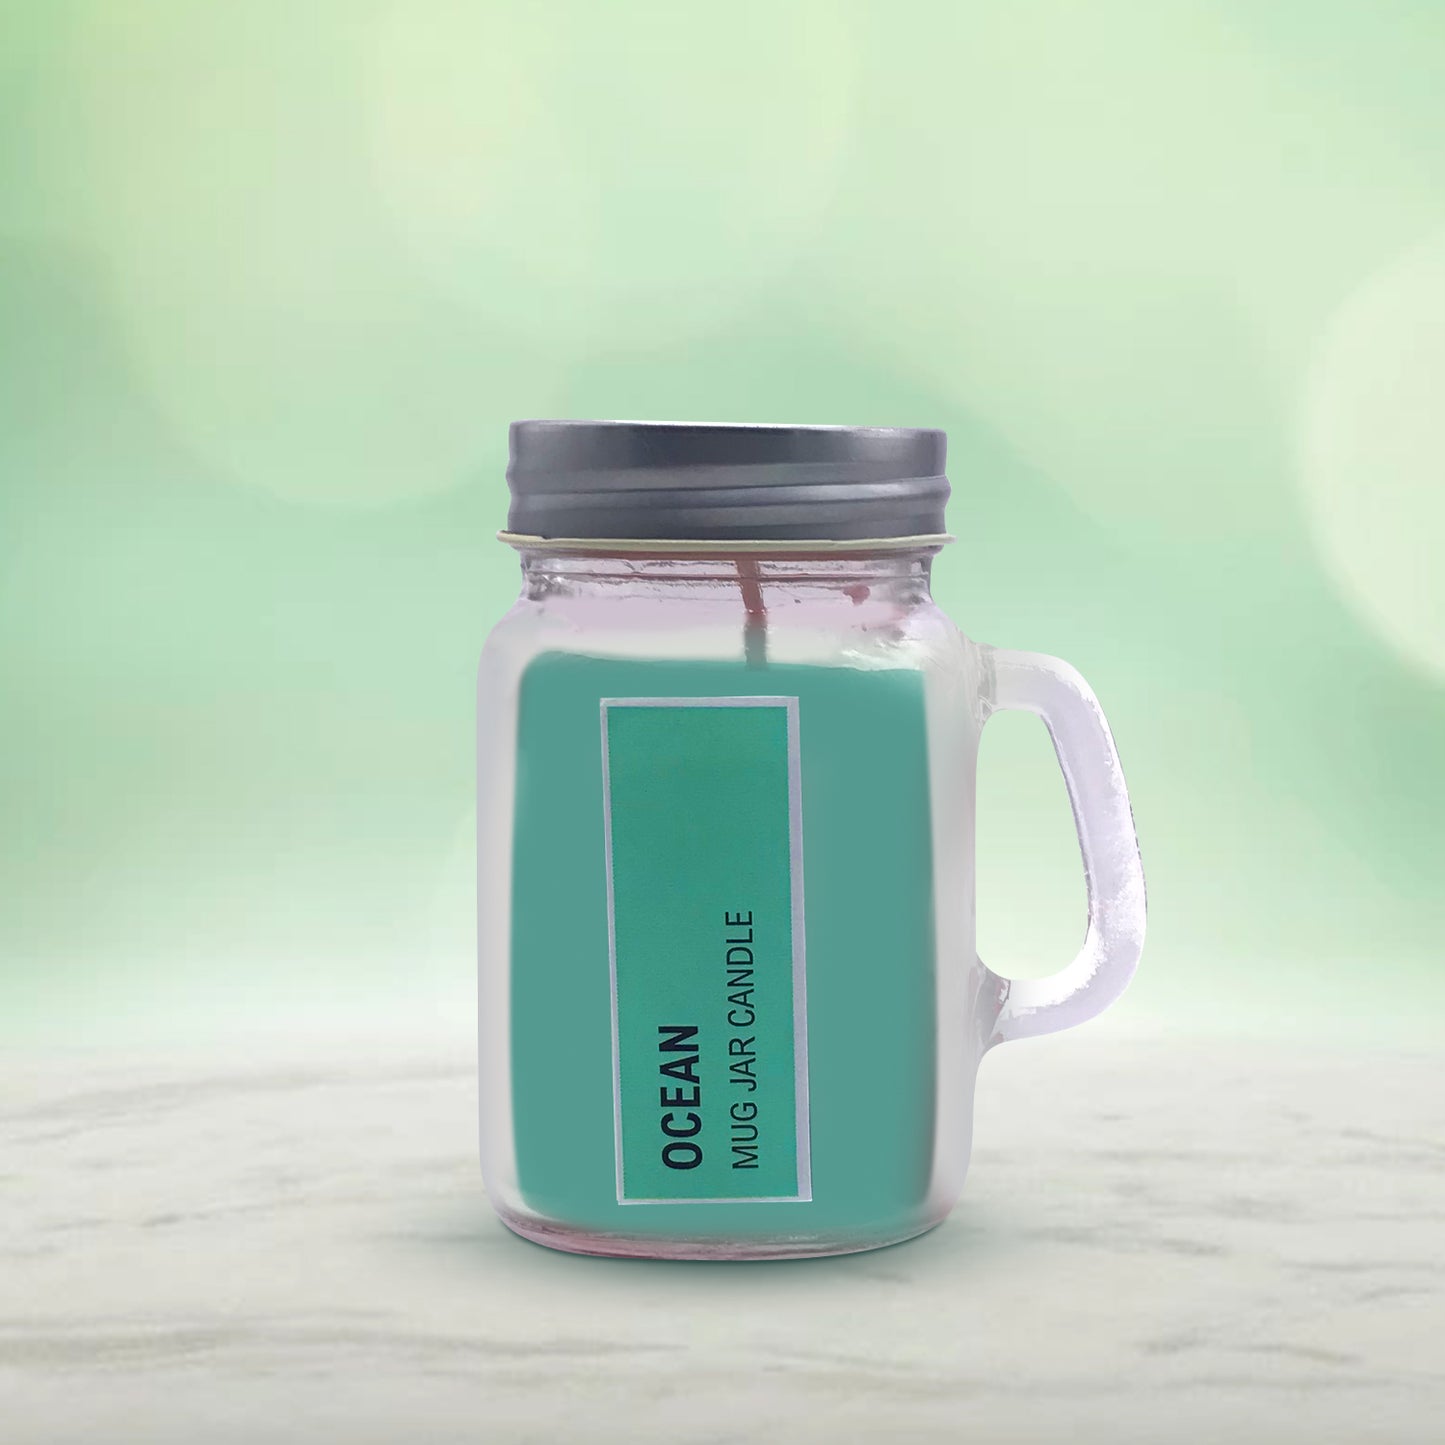 AuraDecor Mug Jar Candle ( Ocean Fragrance )